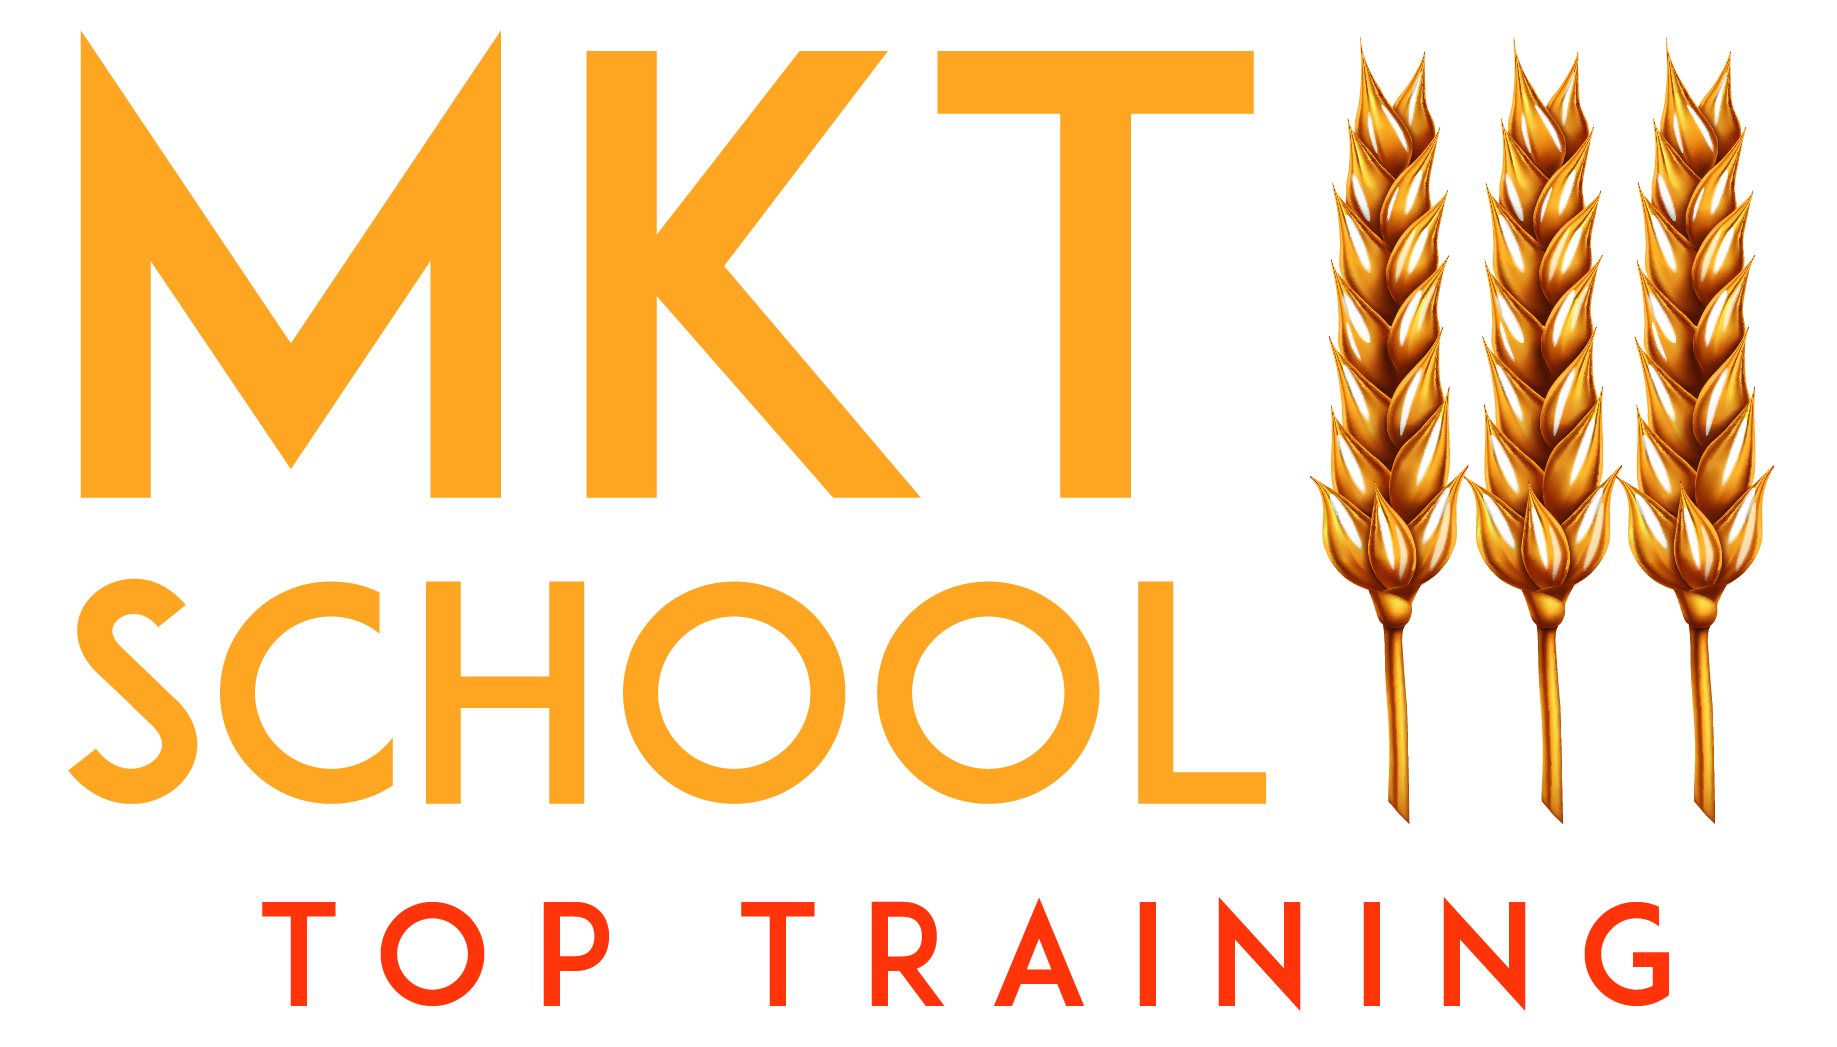 Marketing School Top Training